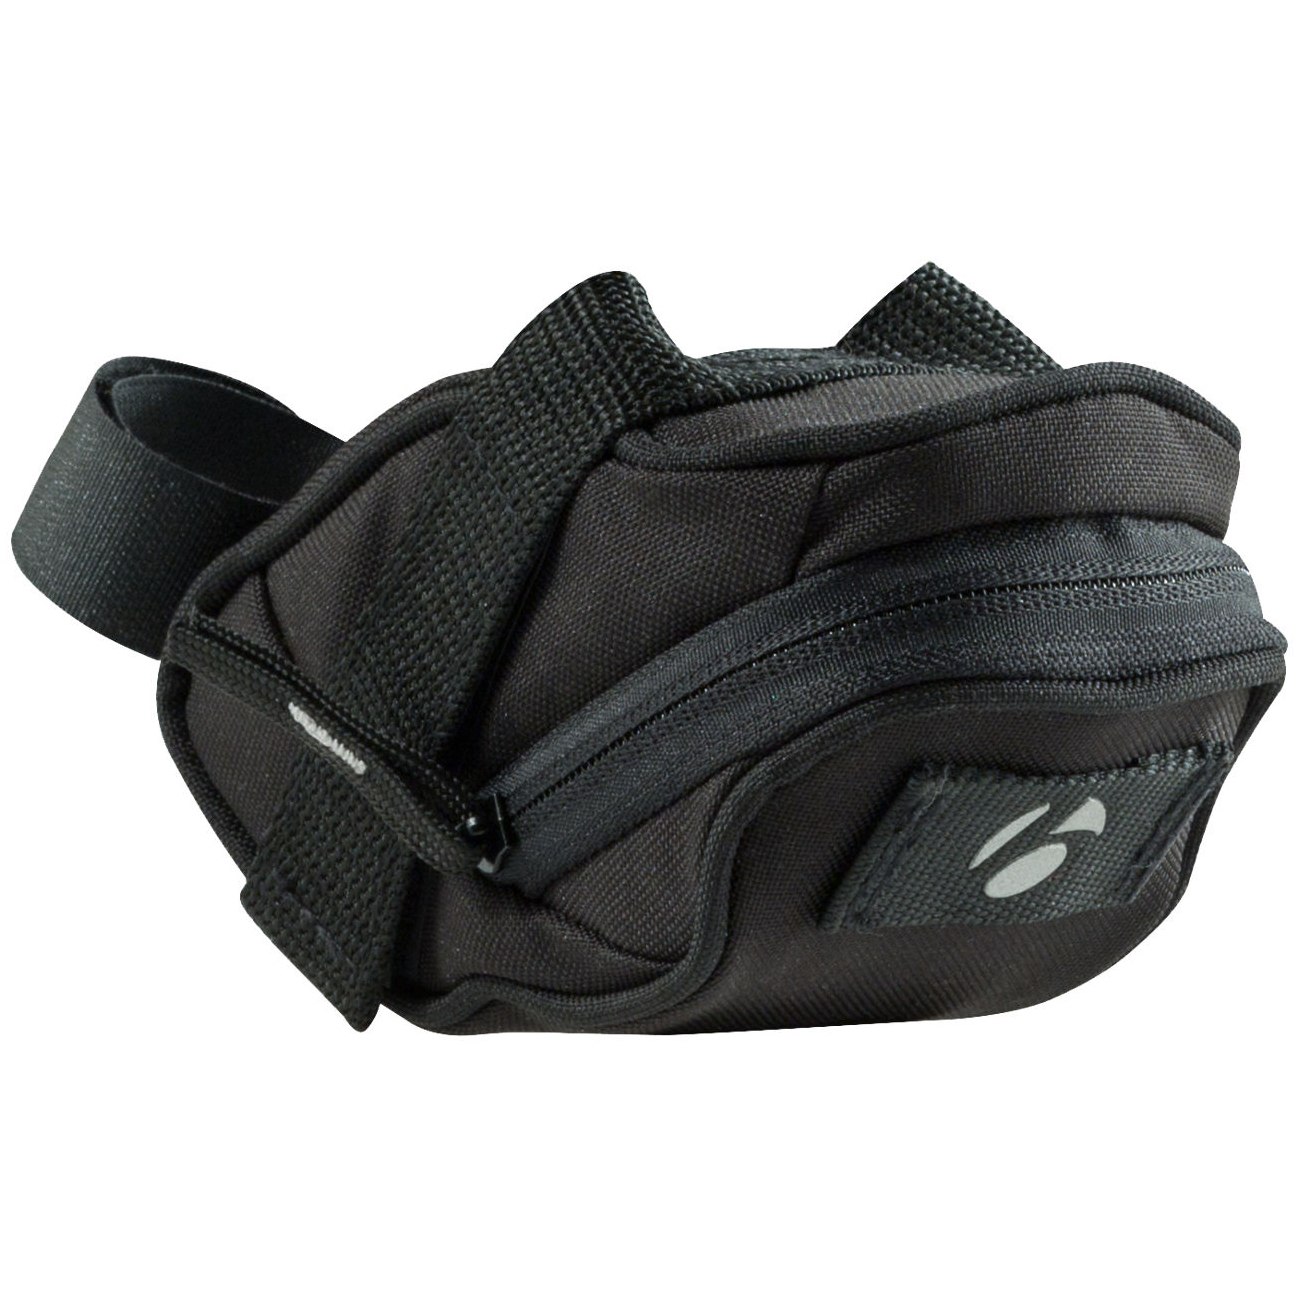 Productfoto van Bontrager Comp Small Seat Pack - black